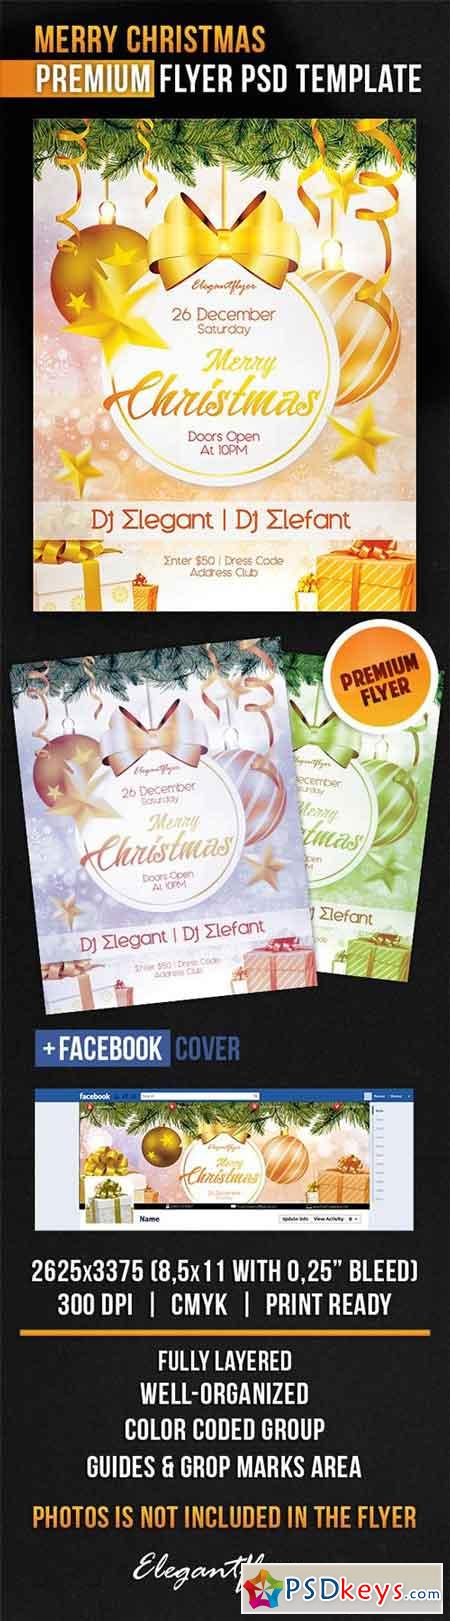 Merry Christmas Flyer PSD Template + Facebook Cover 2